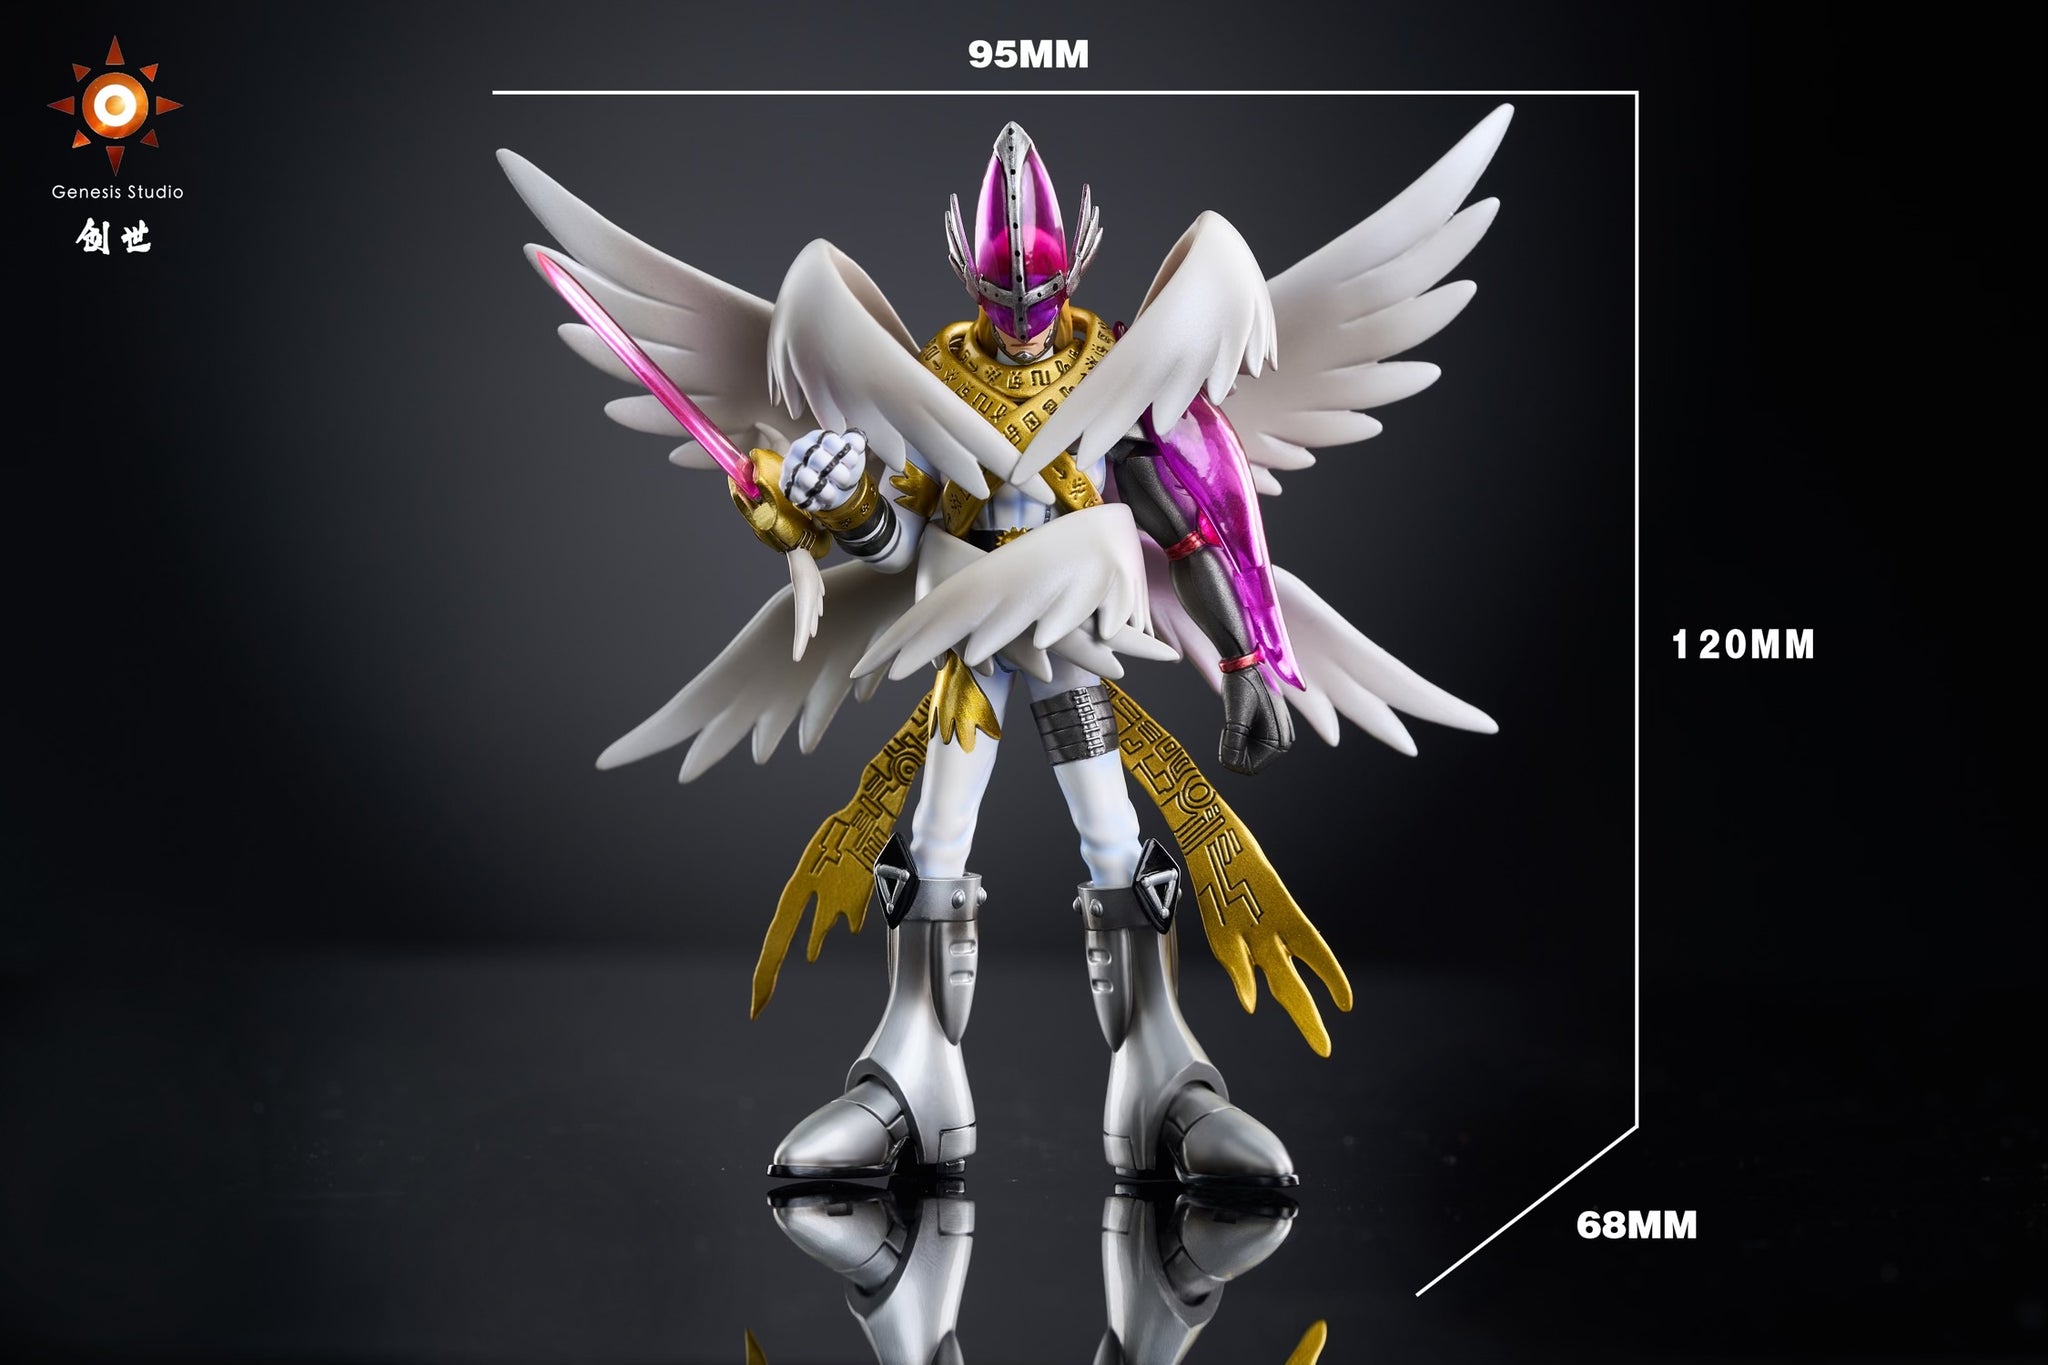 Digimon Genesis Studio Holy Angemon Resin Statue [PRE-ORDER]